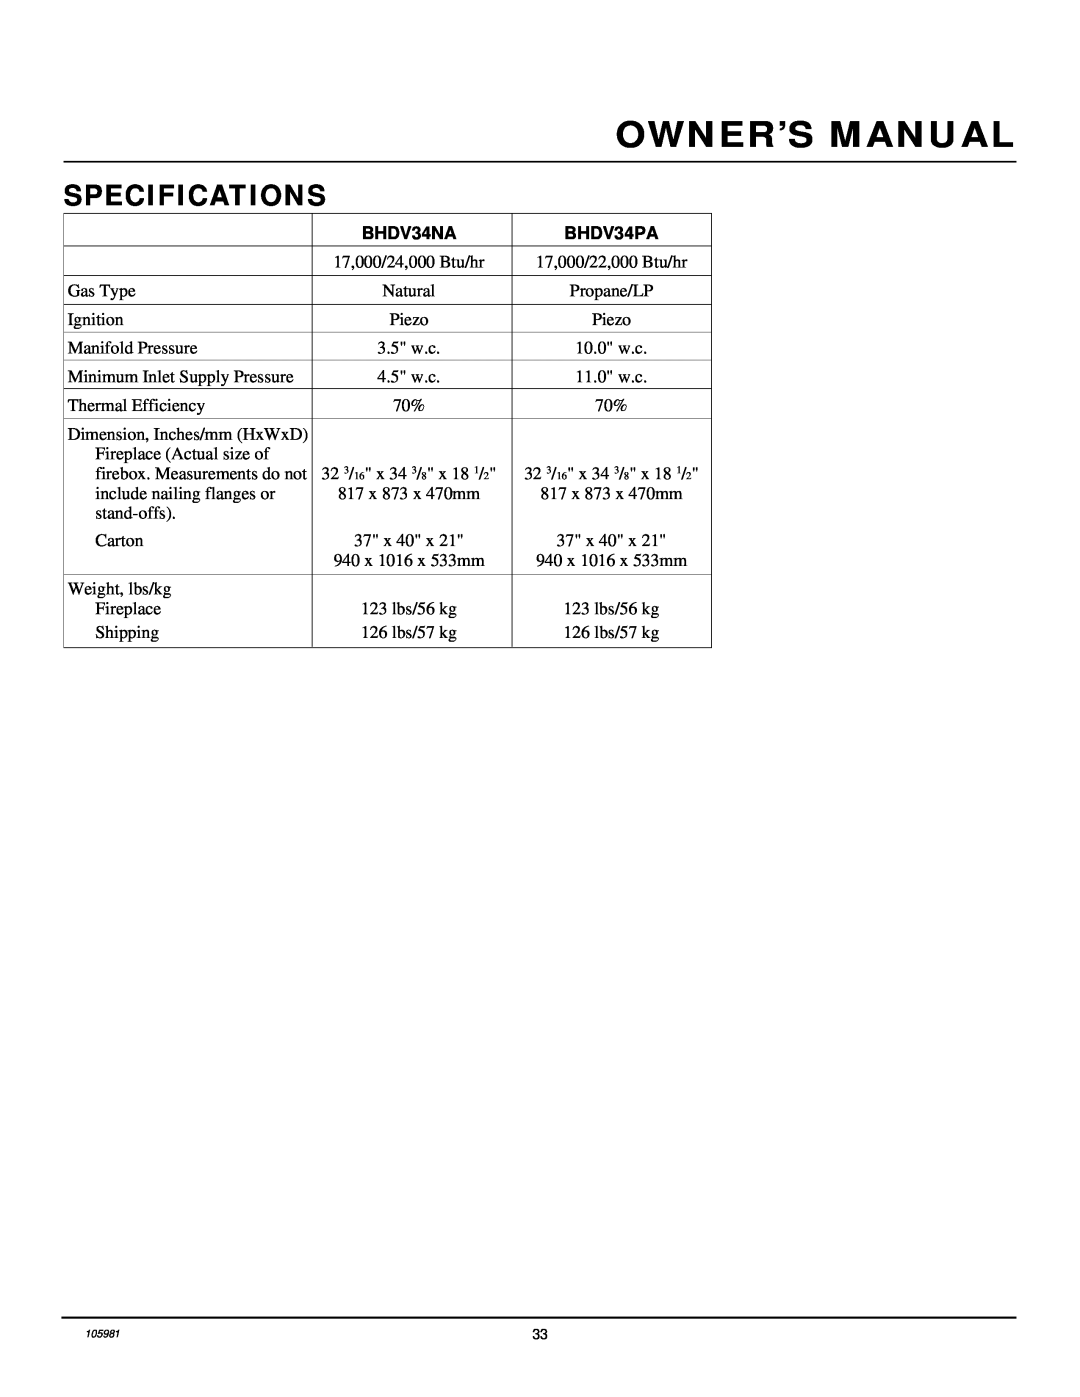 Desa BHDV34PA installation manual Specifications, BHDV34NA 